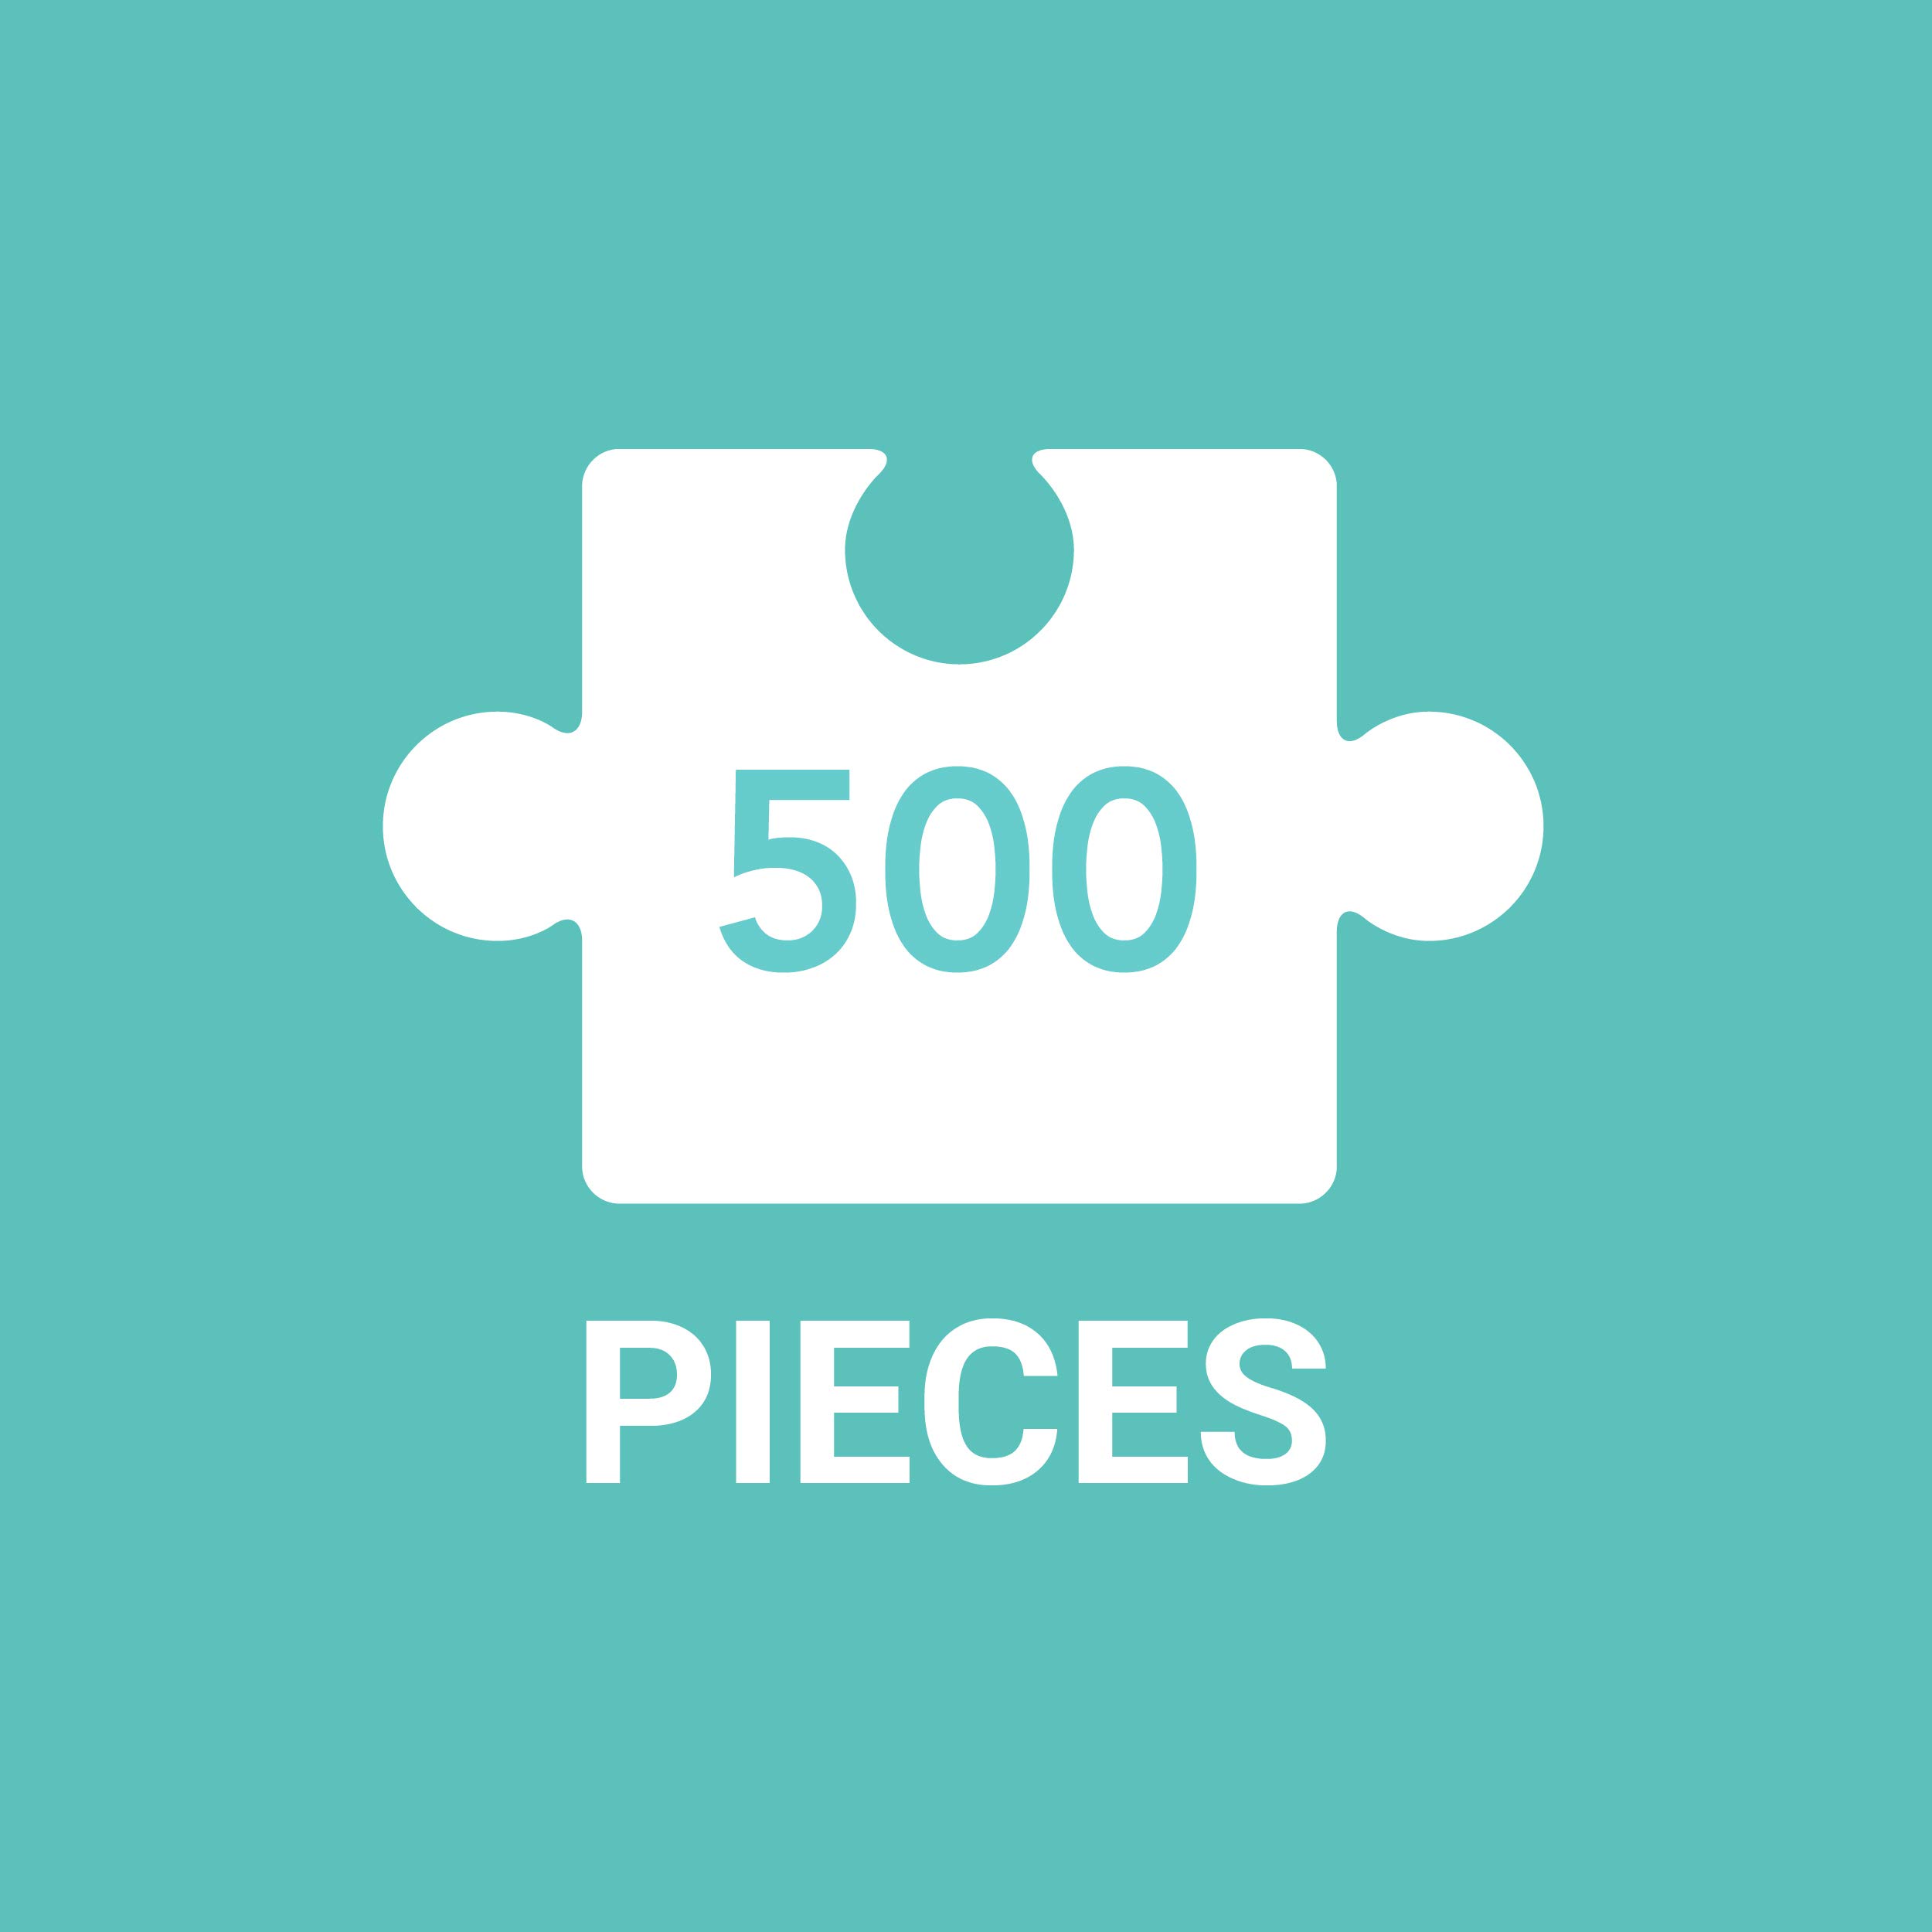 Mudpuppy 500 Piece Unicorn Jigsaw Puzzle for Families, Reading Unicorn Puzzle for Girls and Families with Fun Theme